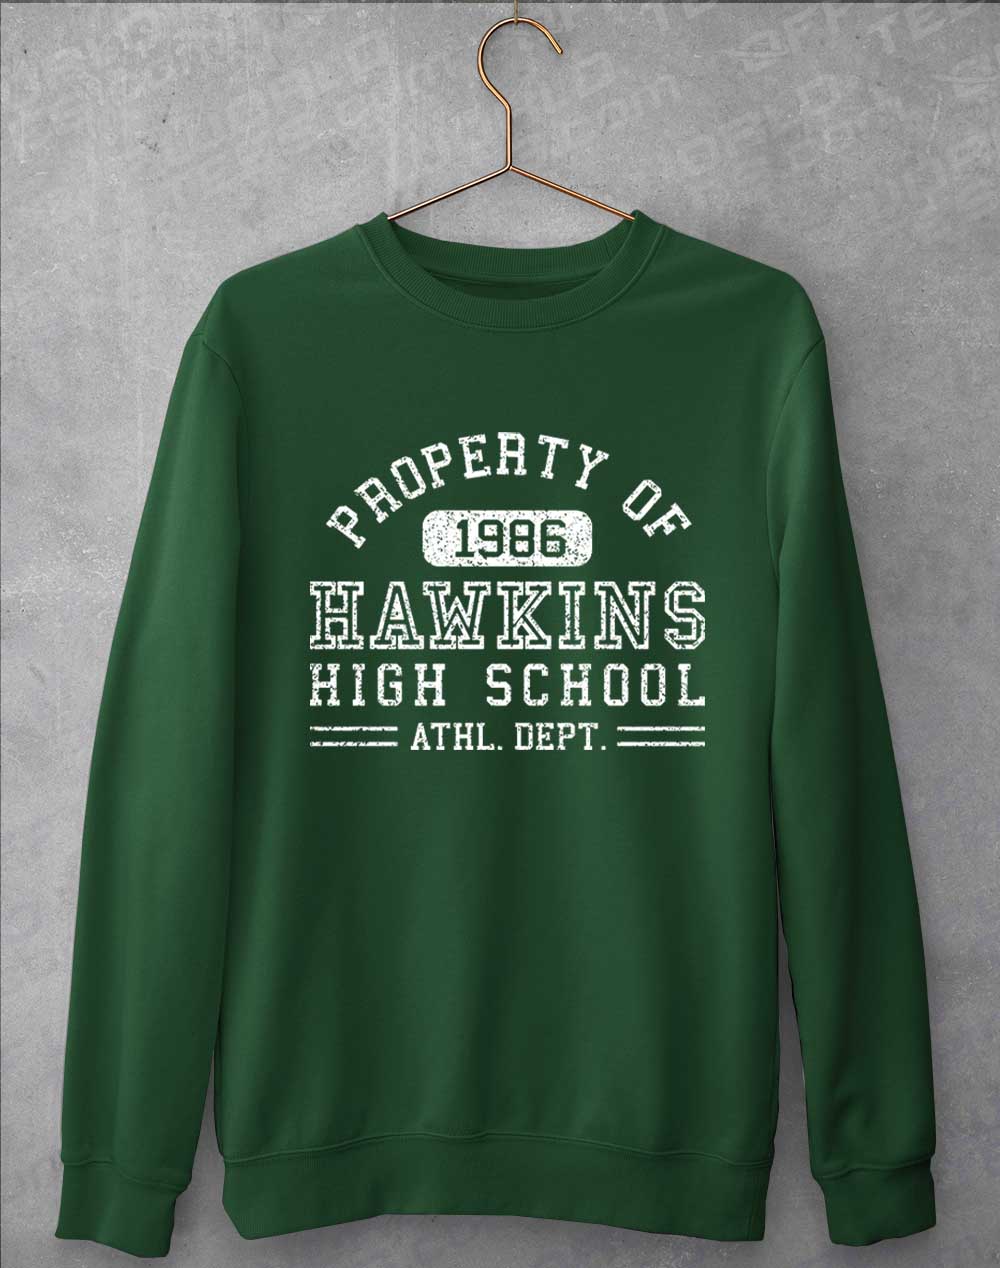 Bottle Green - Hawkins High School Athletics 1986 Sweatshirt